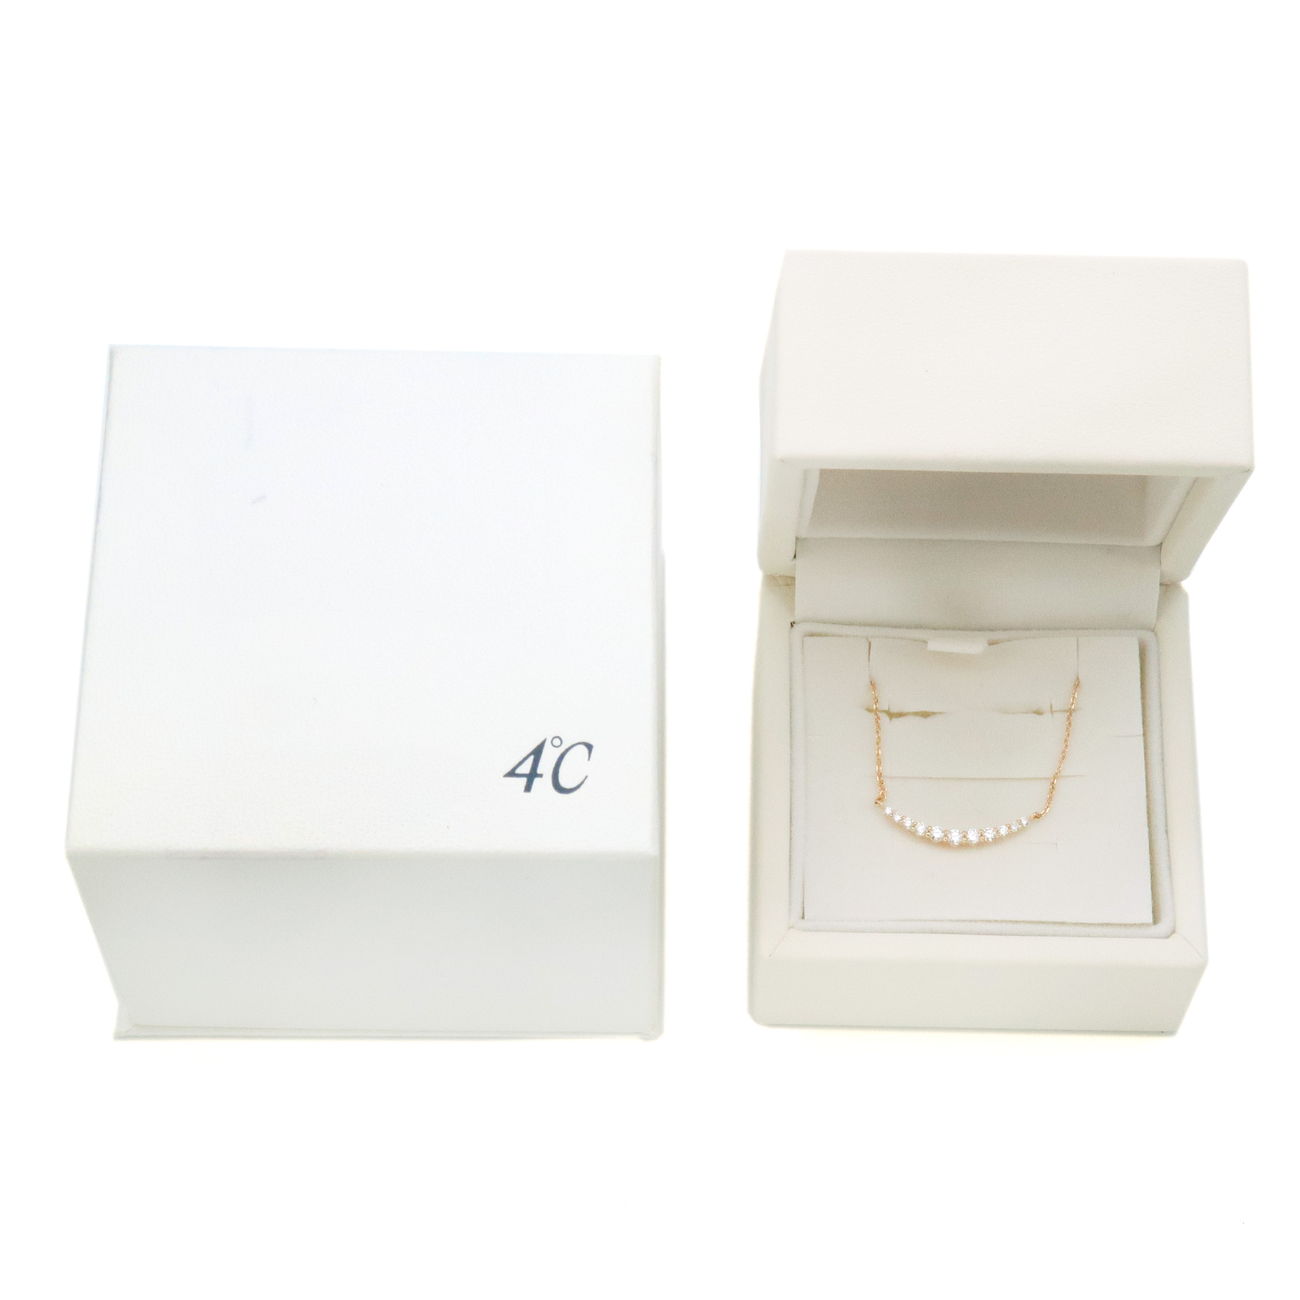 4C Diamond Necklace K18PG 750PG Rose Gold